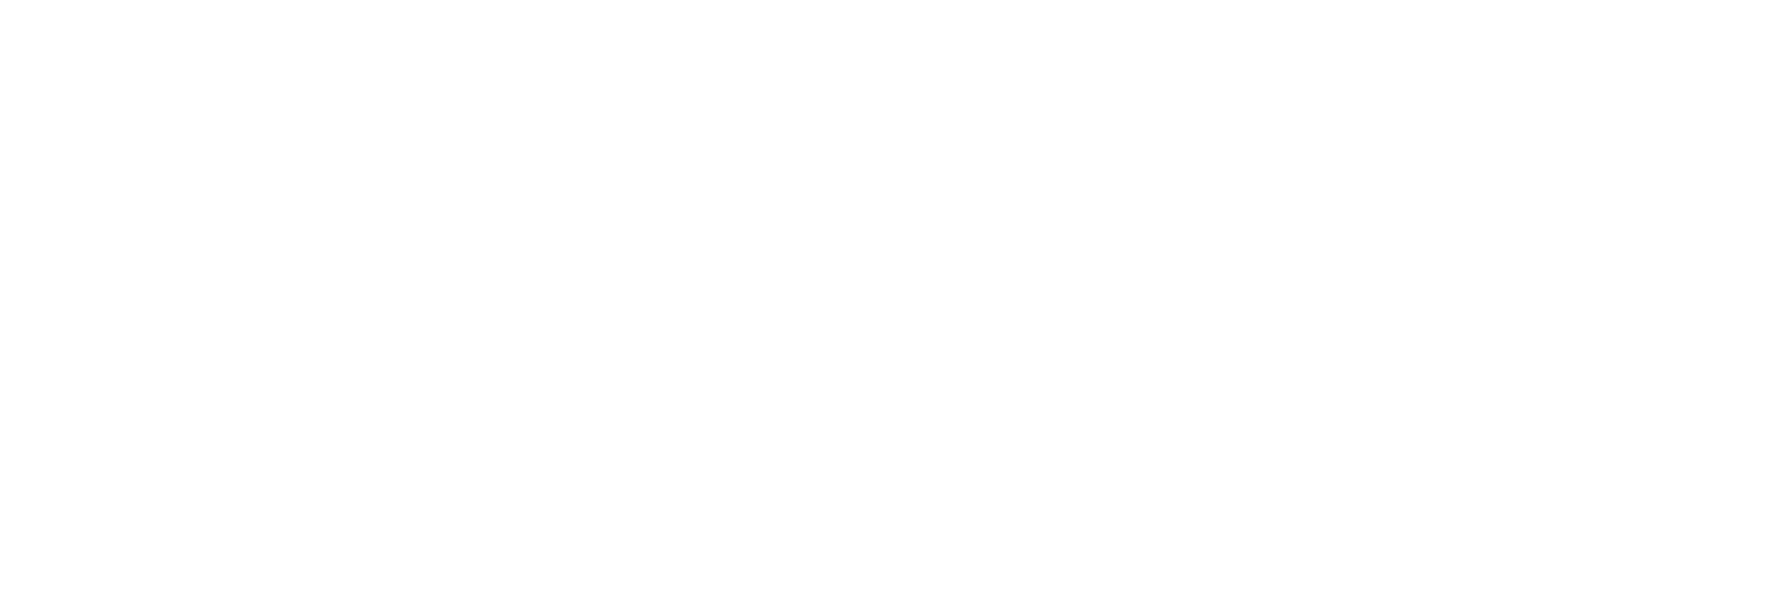 Yohan Blake Rehab & Wellness Centre